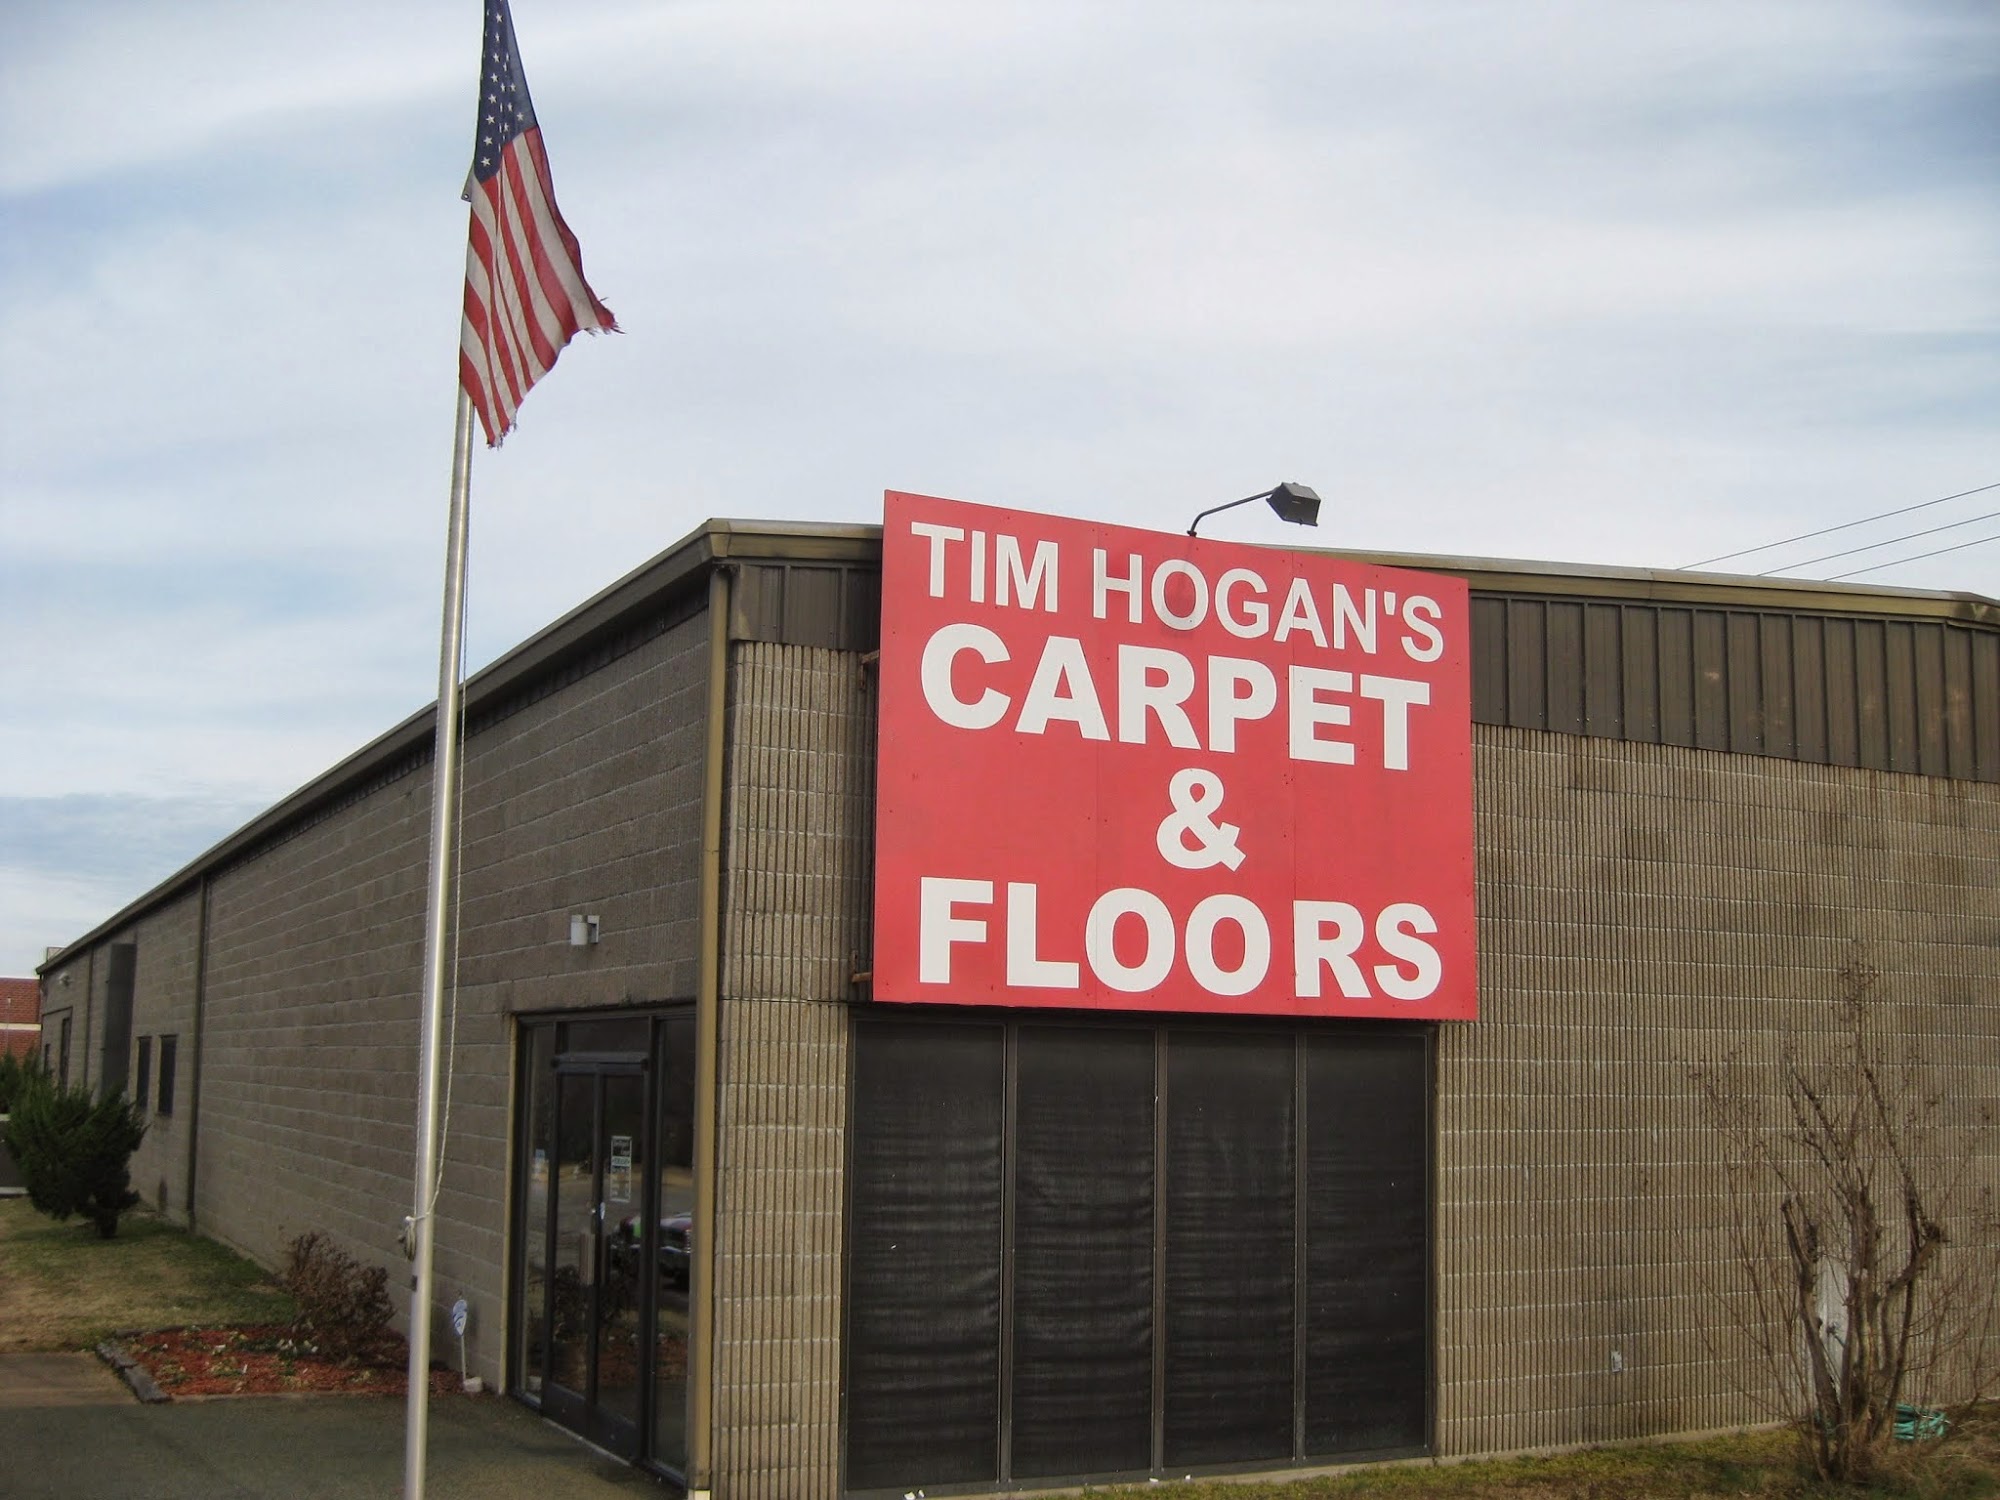 Tim Hogans Carpet & Floors